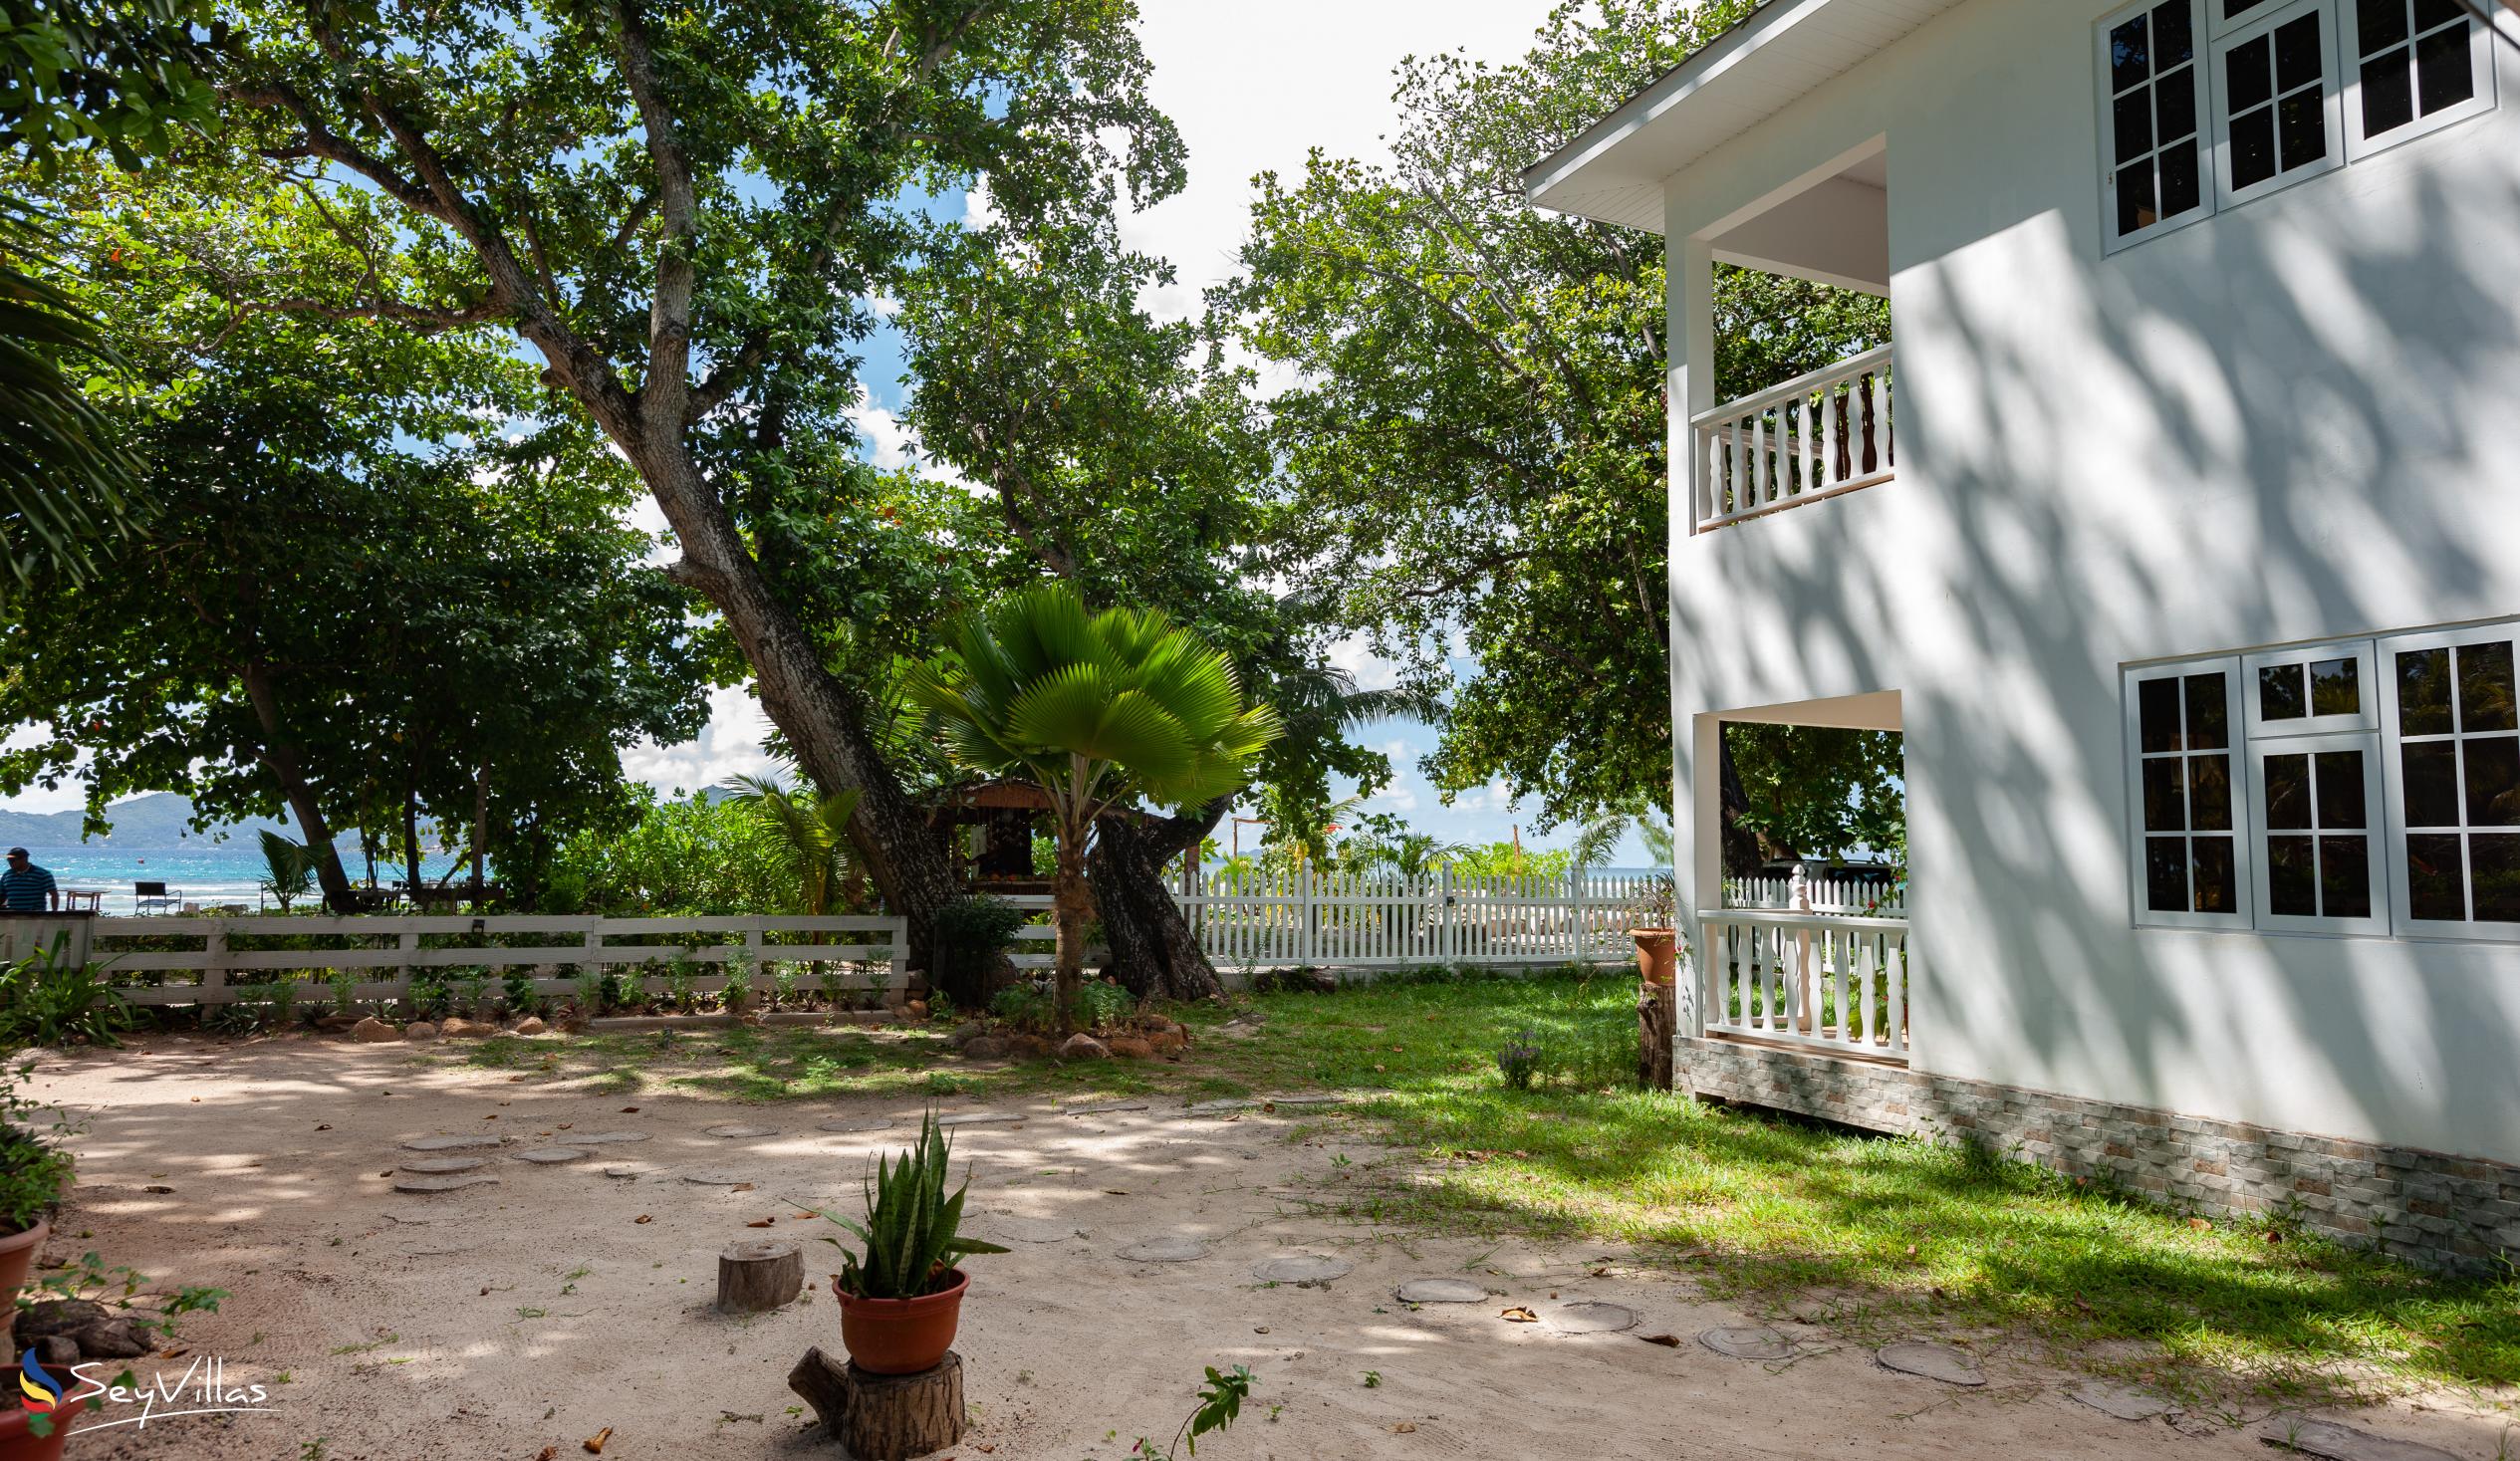 Foto 7: Villa Charette - Aussenbereich - La Digue (Seychellen)